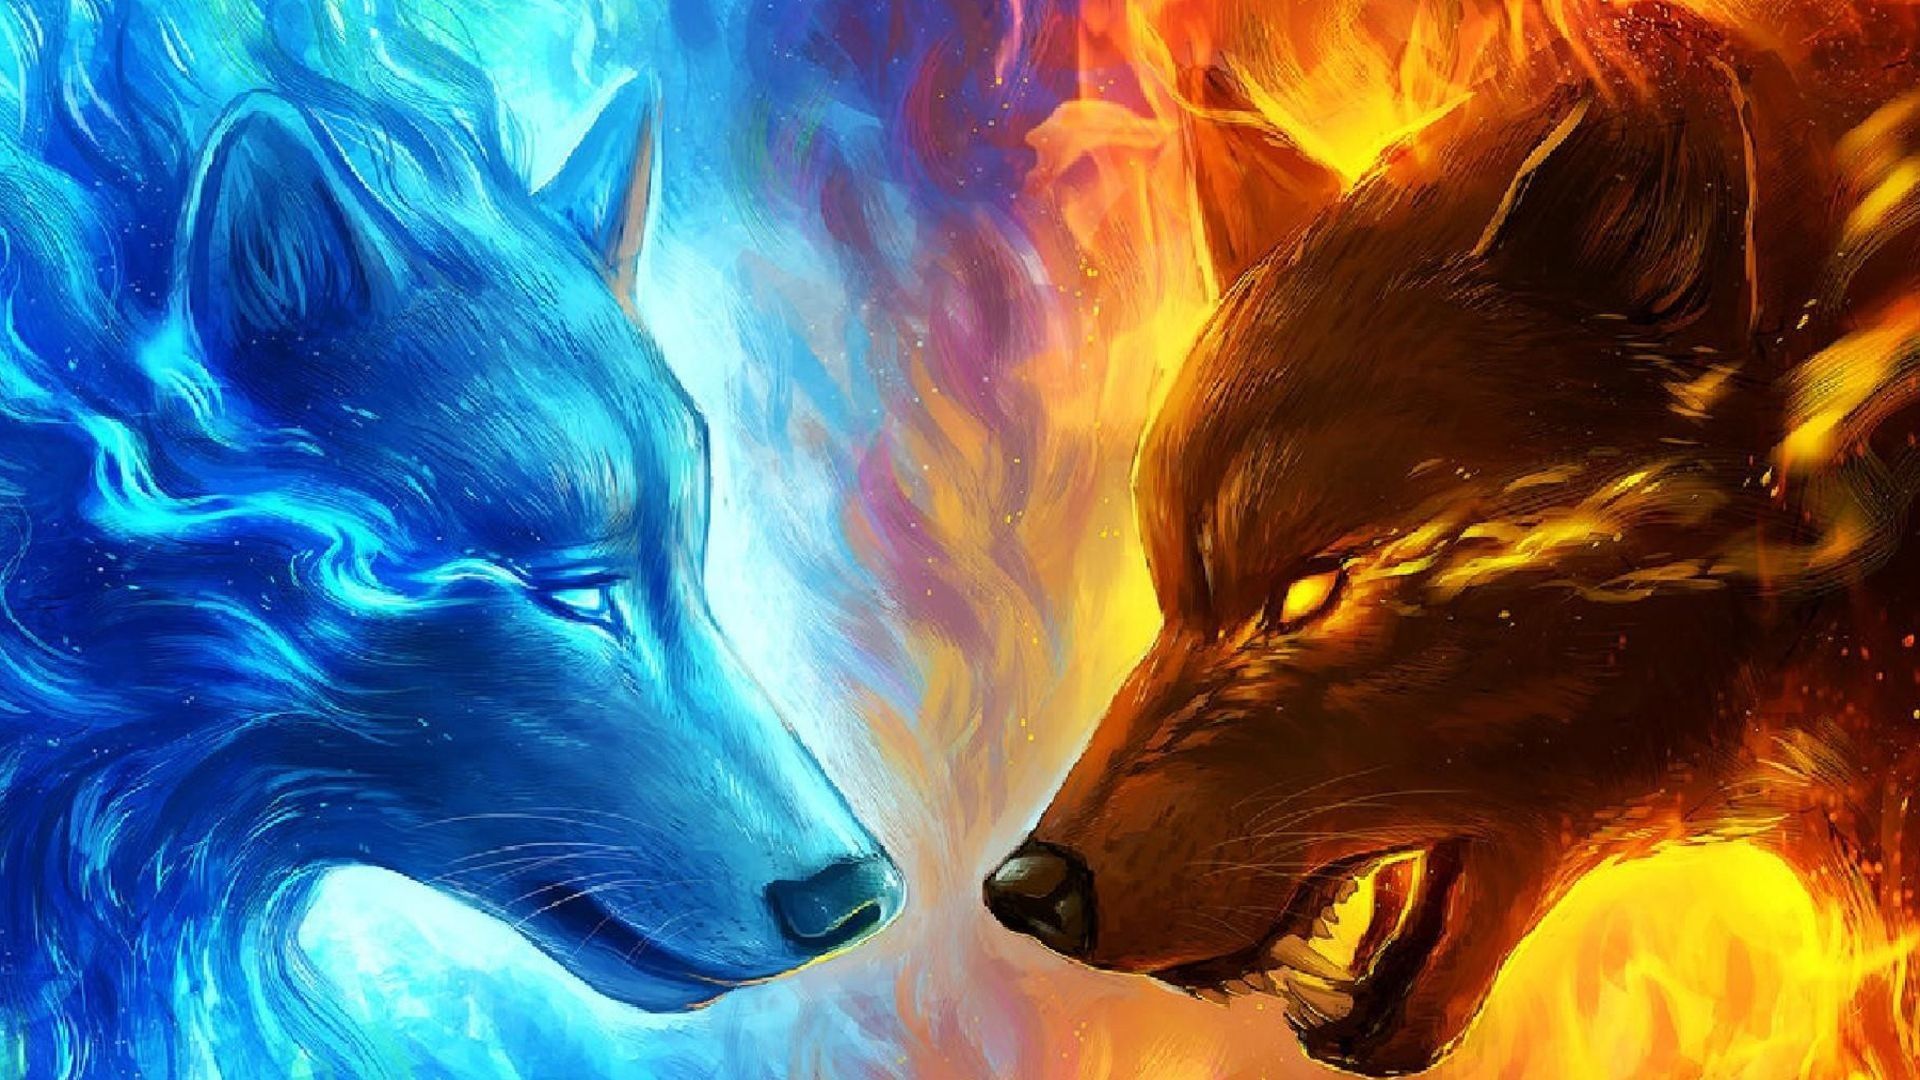 Inspirational Fire Wolf Wallpaper. Ice wolf wallpaper, Wolf wallpaper, Fantasy wolf